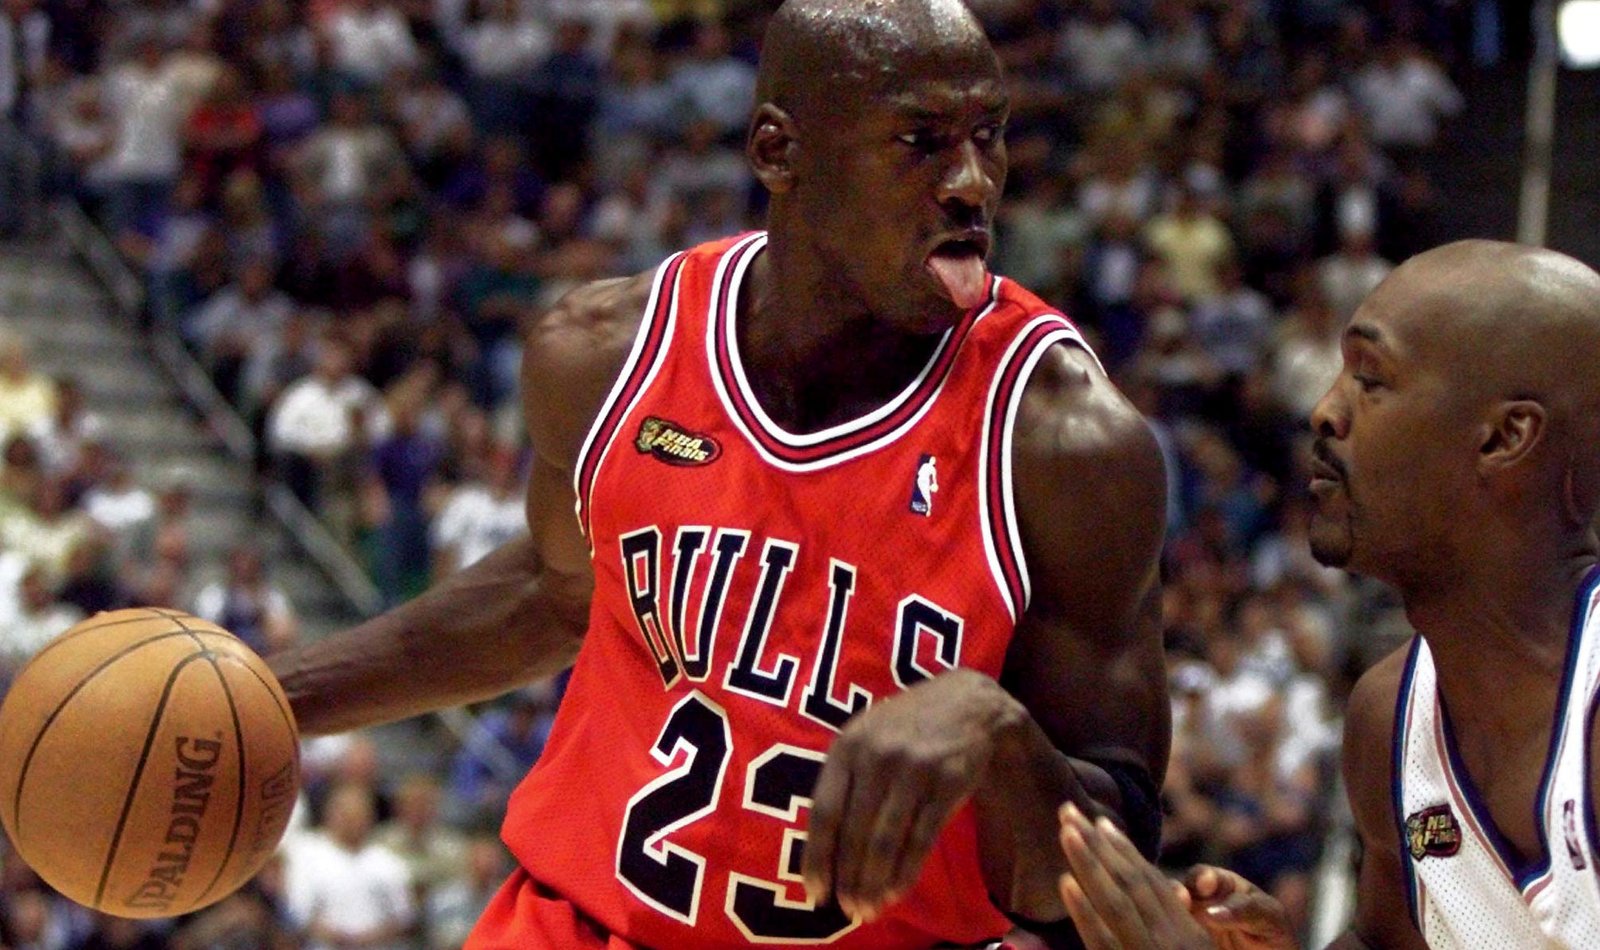 Michael Jordan’s championship sneakers sell for record $8 million